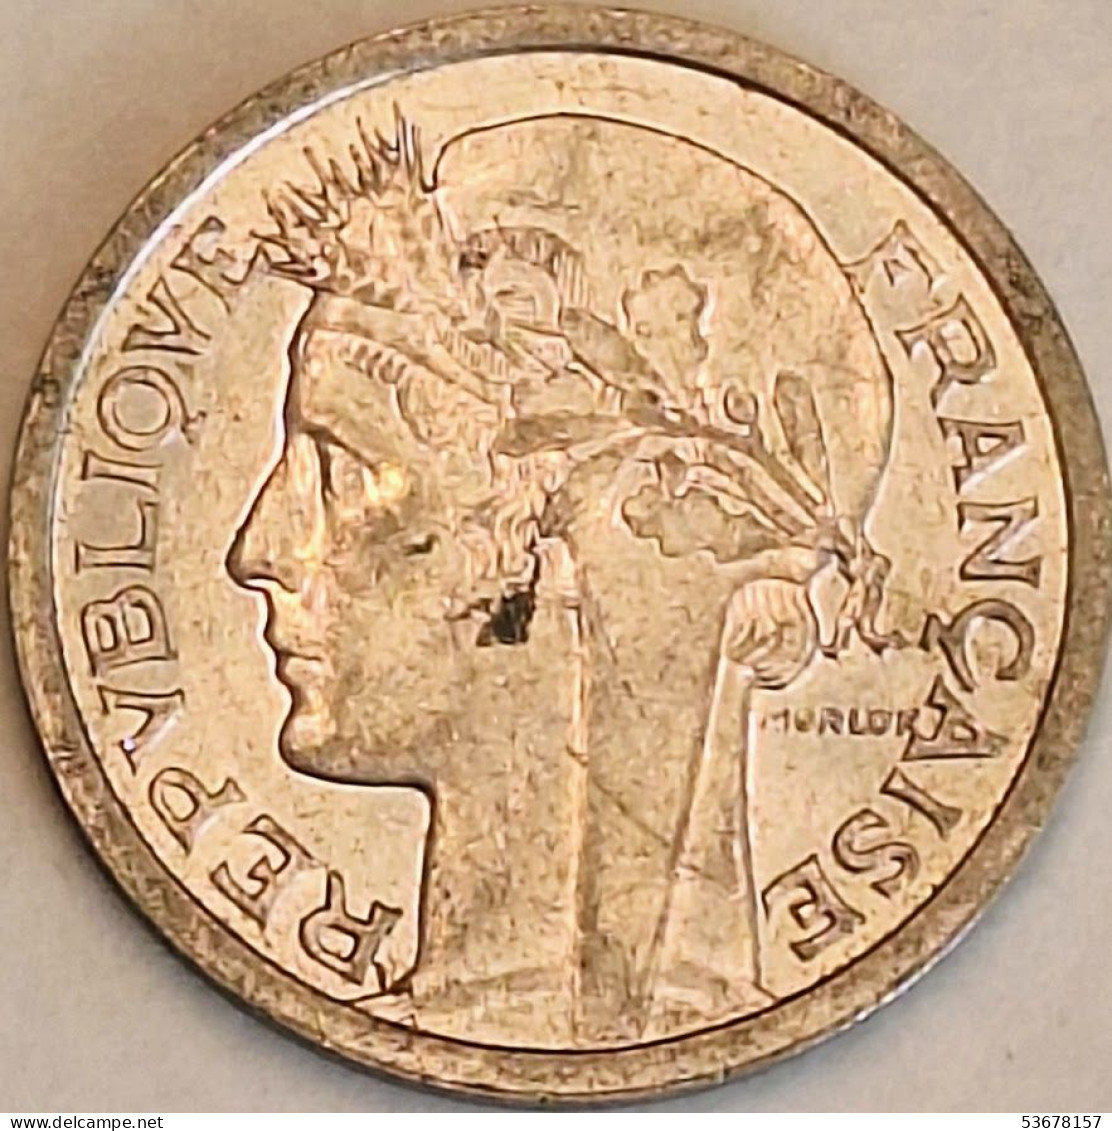 France - Franc 1957, KM# 885a.1 (#4087) - 1 Franc